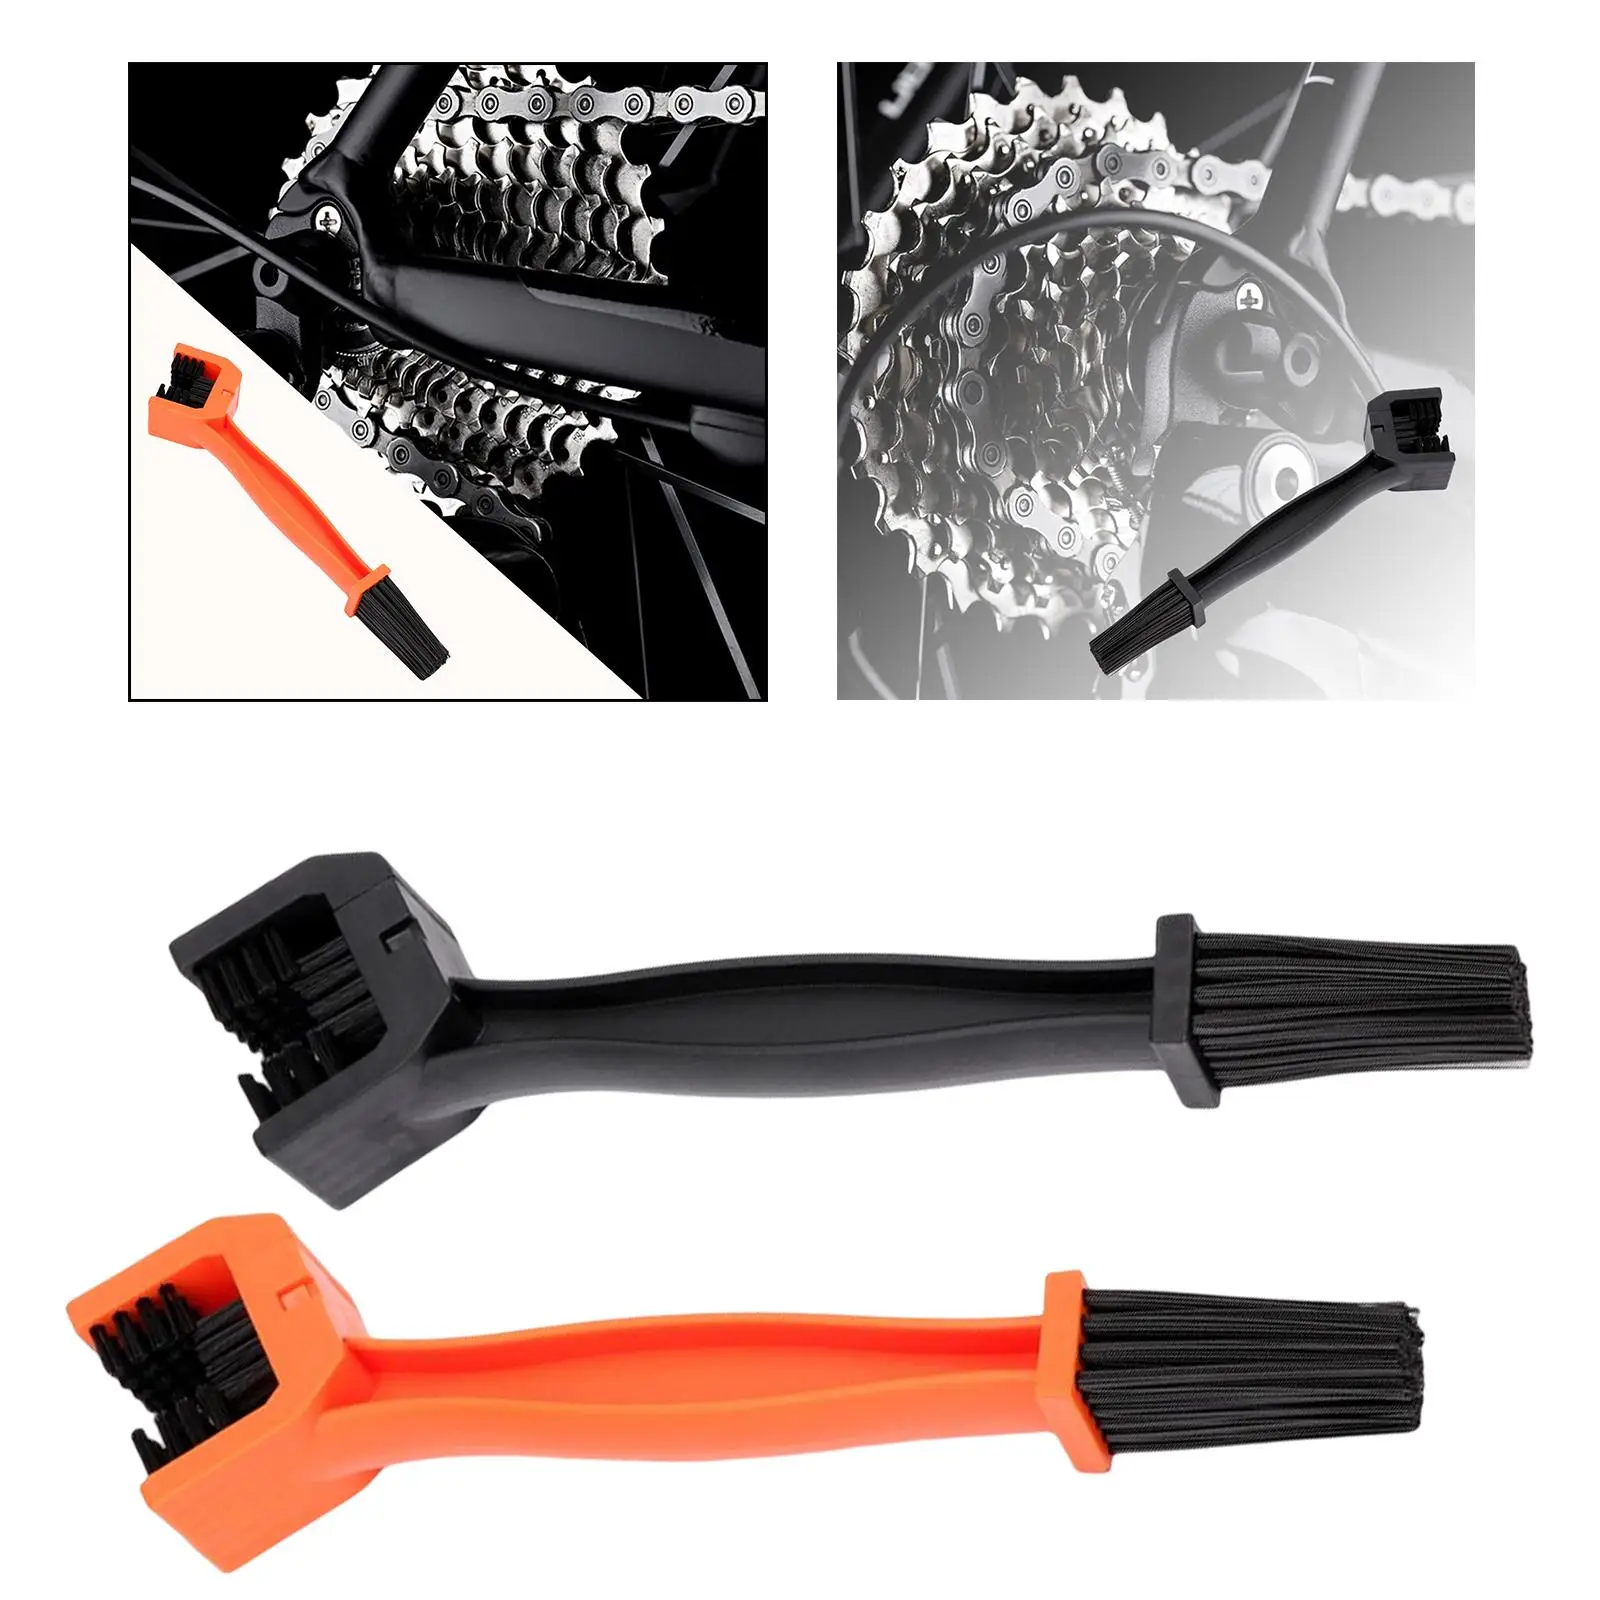 Motorcycle Chain Gear Brush, Portable Chain Gear Brush, Chain